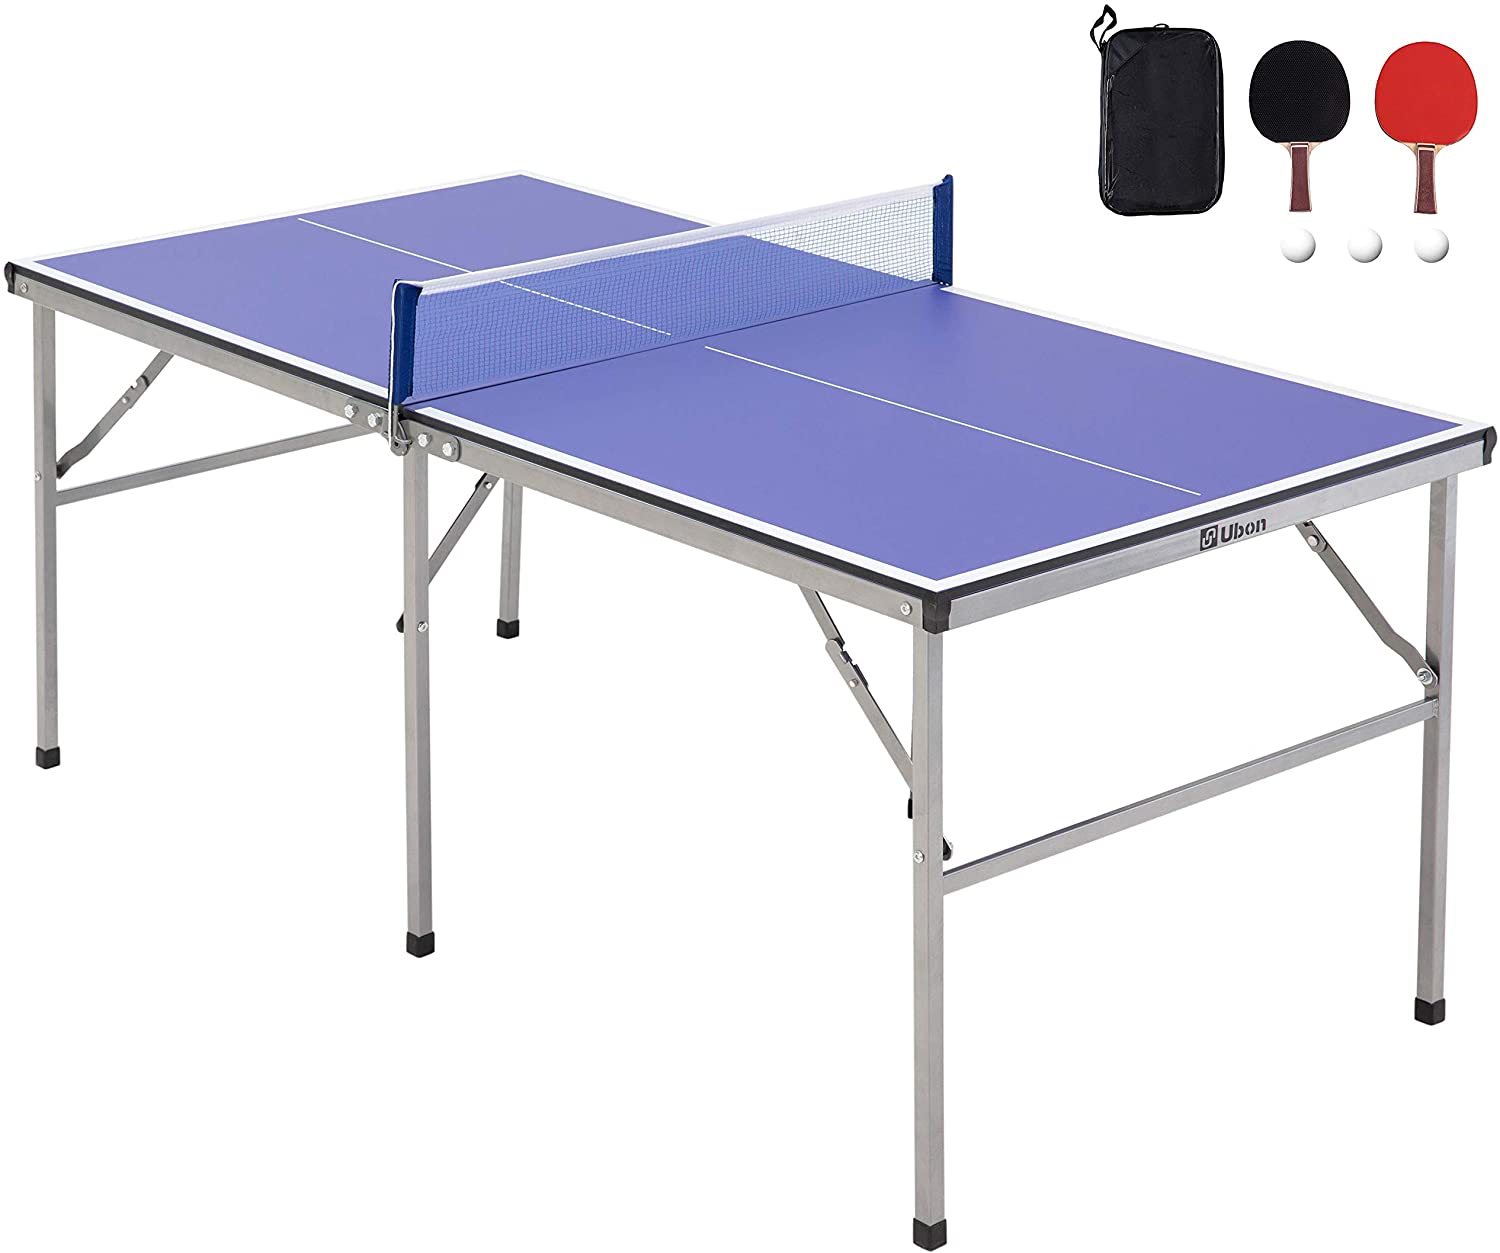 Torneo invite стол теннисный. Sunflex Outdoor 105 теннисный стол. Стол теннисный 61020. Мини стол для настольного тенниса Torneo.